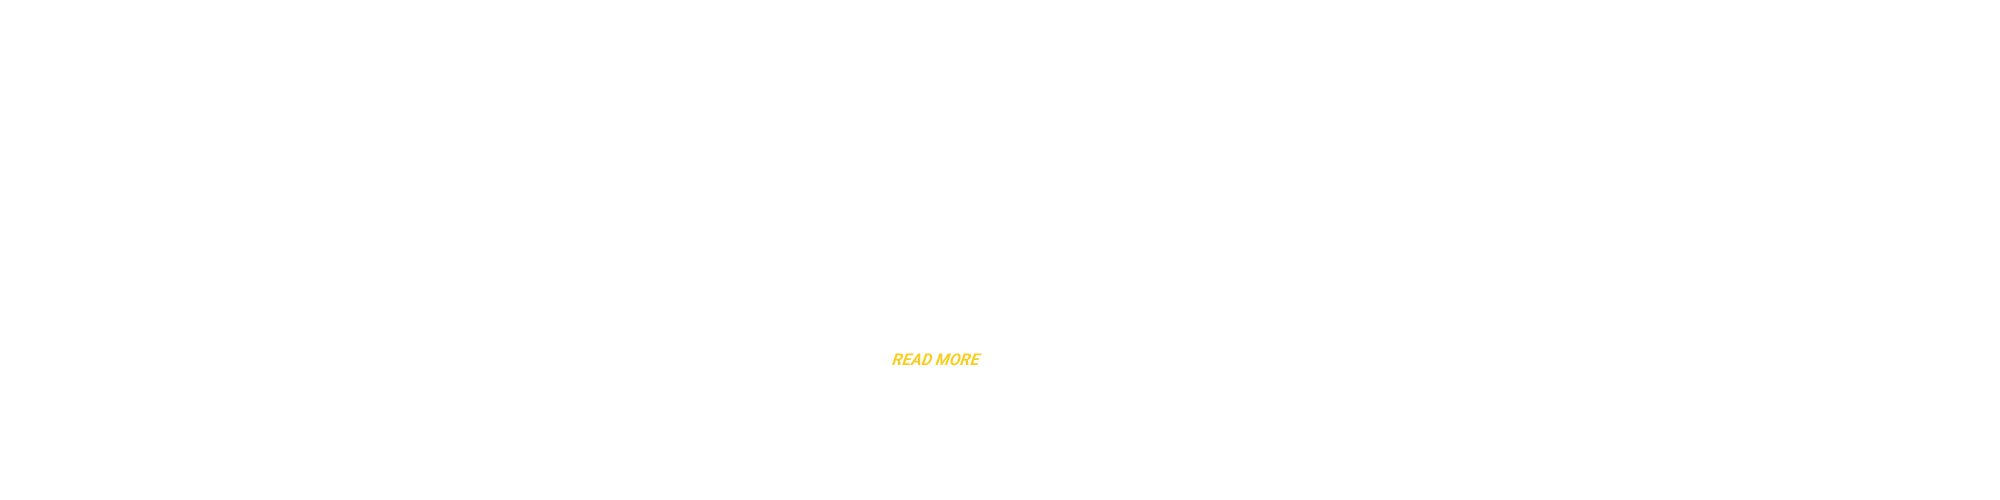 bnr_contact_bg